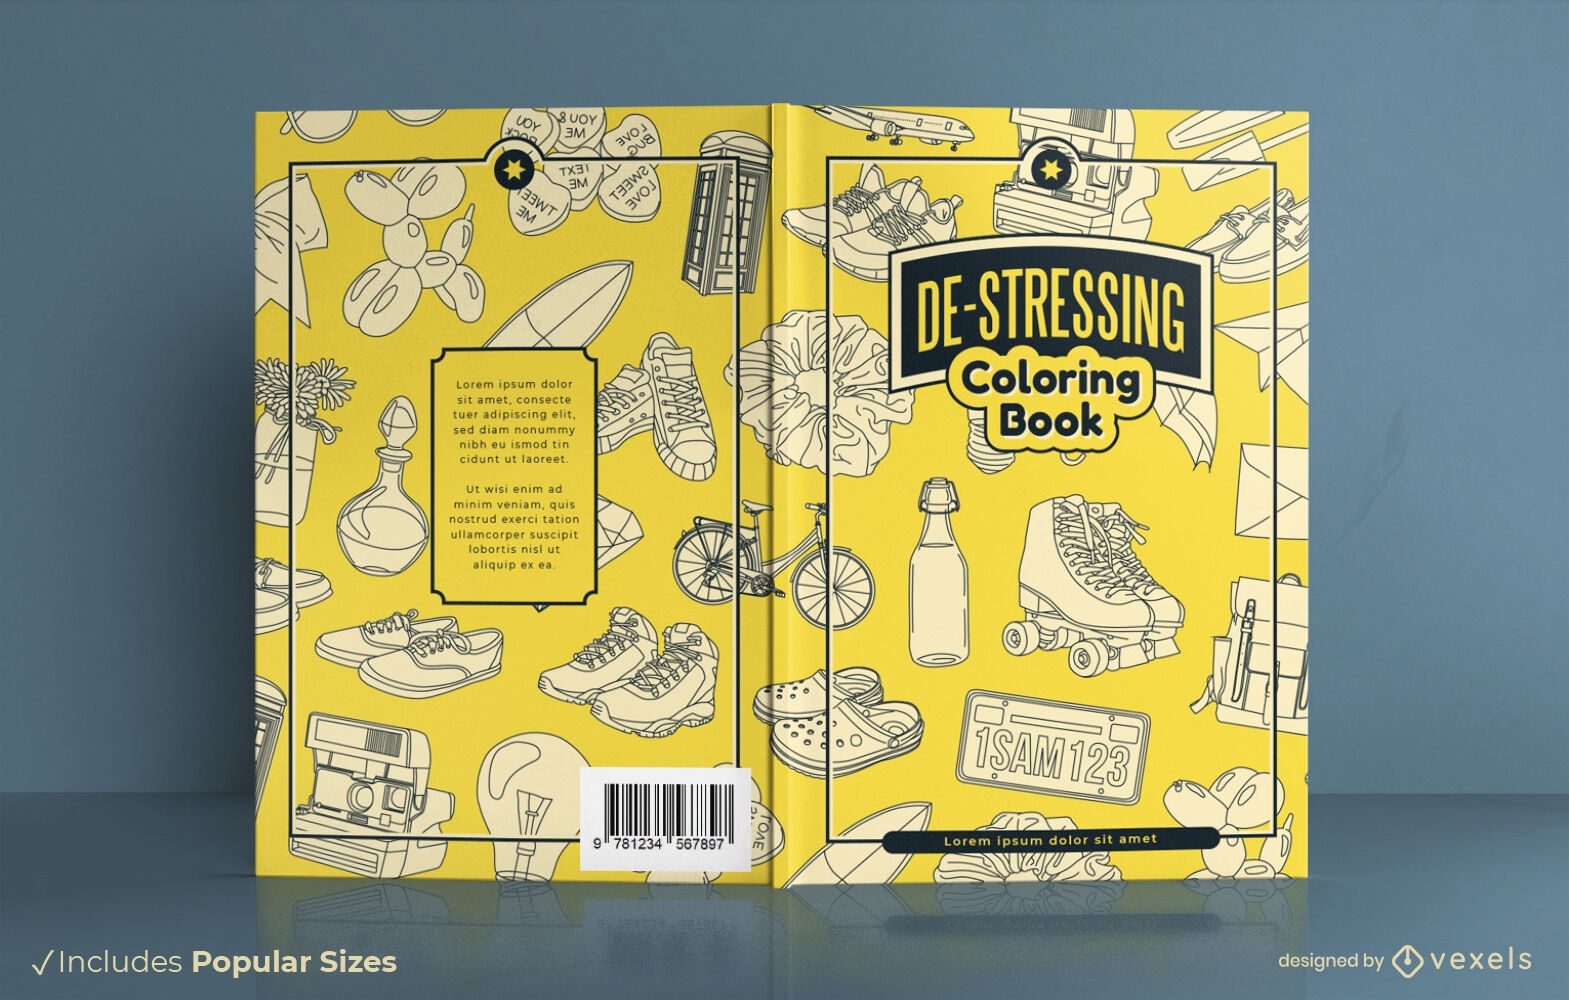 De-stressing coloring book cover design